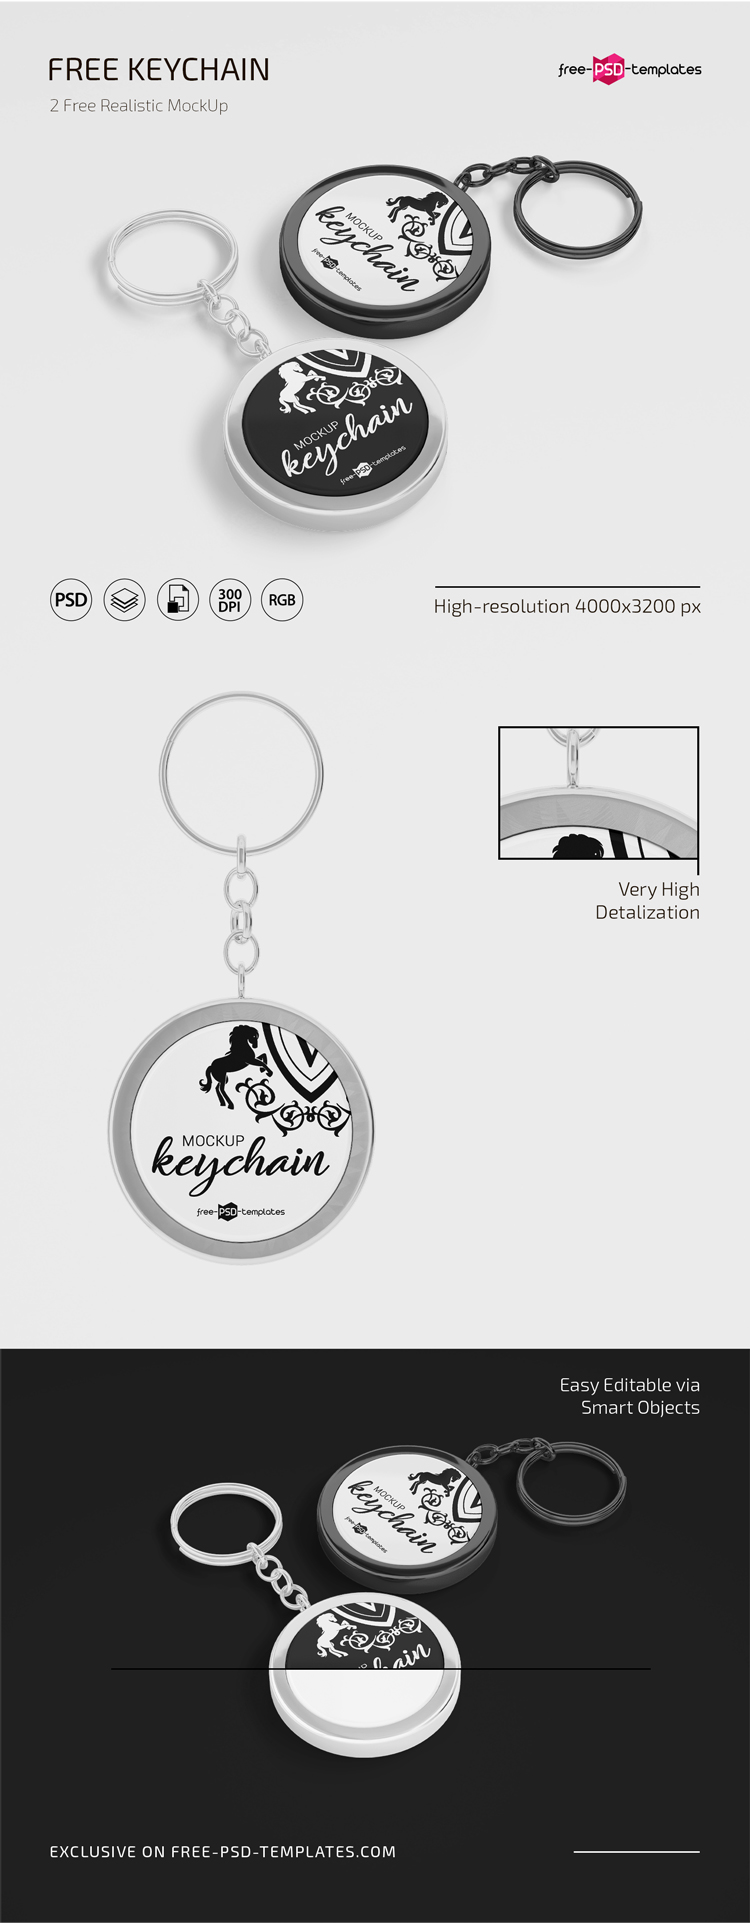 Download Free PSD Keychain Mockup Set | Free PSD Templates PSD Mockup Templates